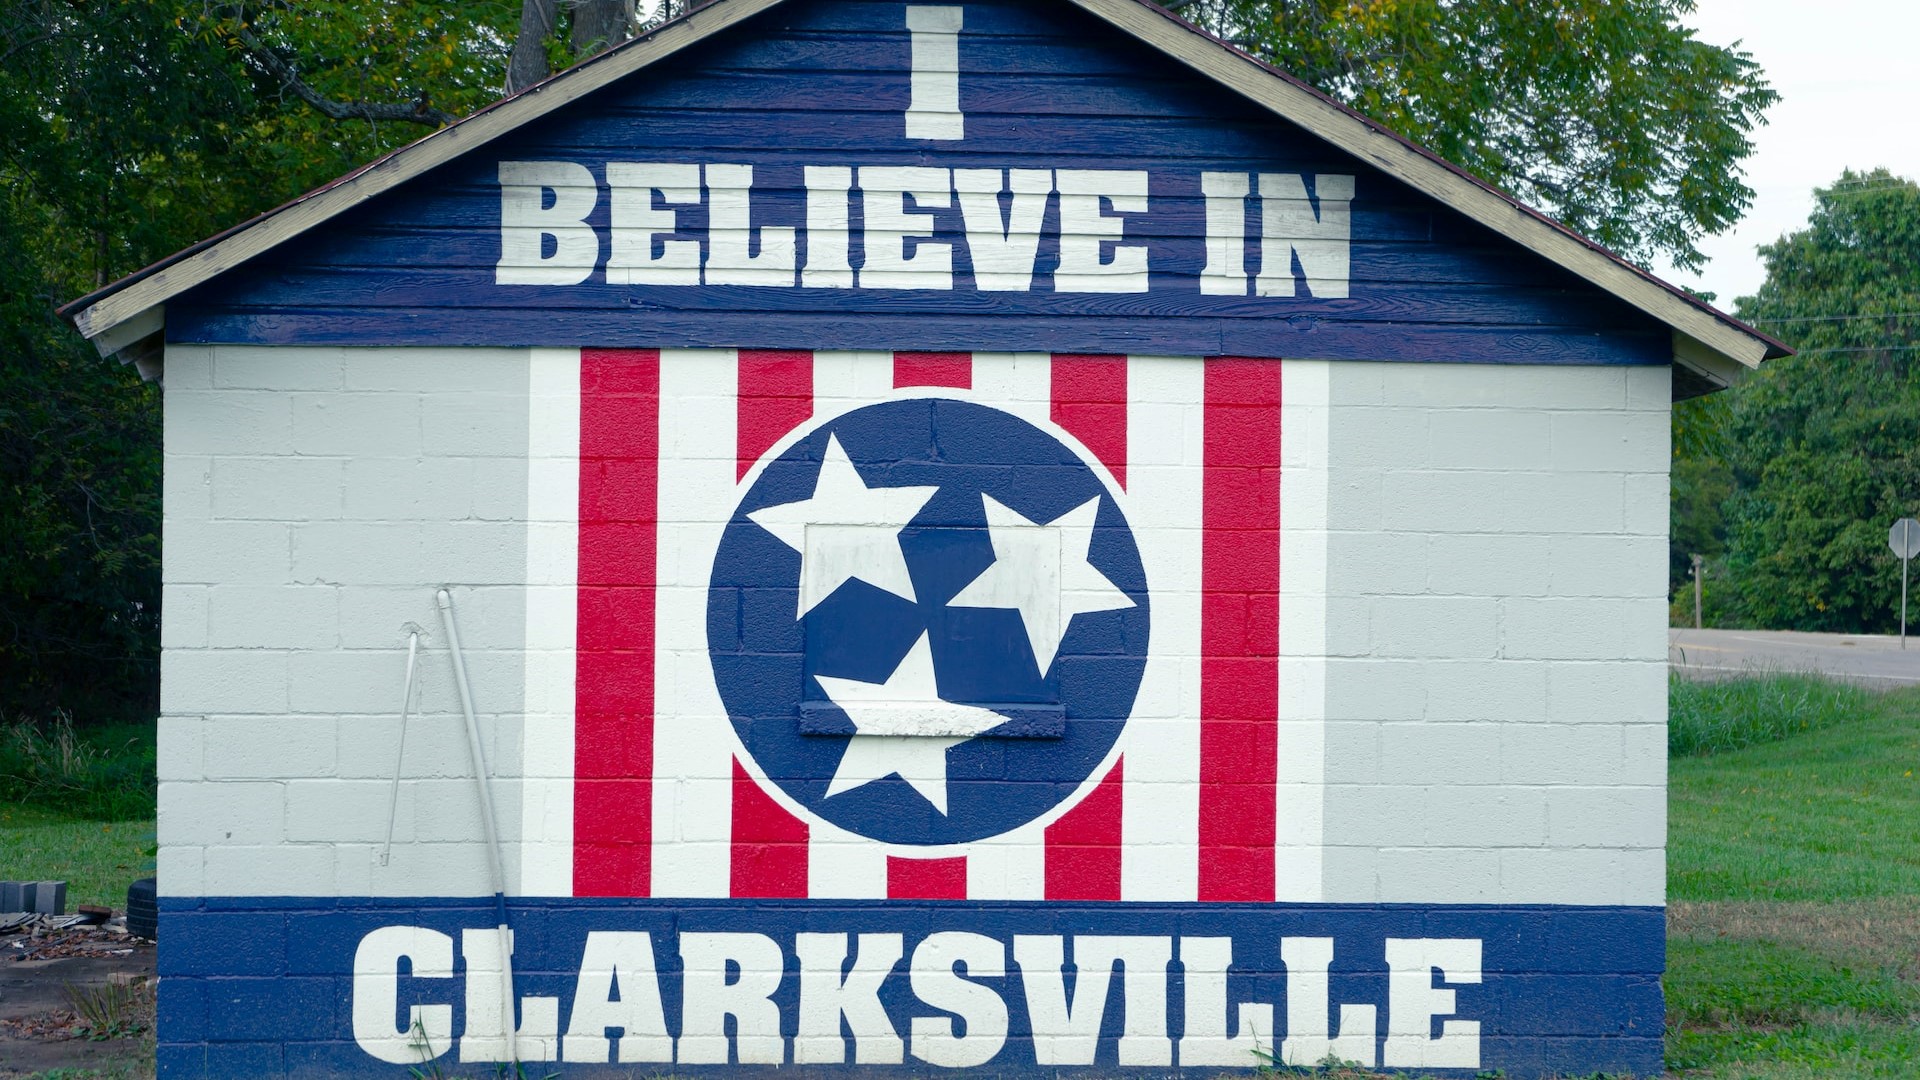 Clarksville wall paint | Goodwill Car Donations